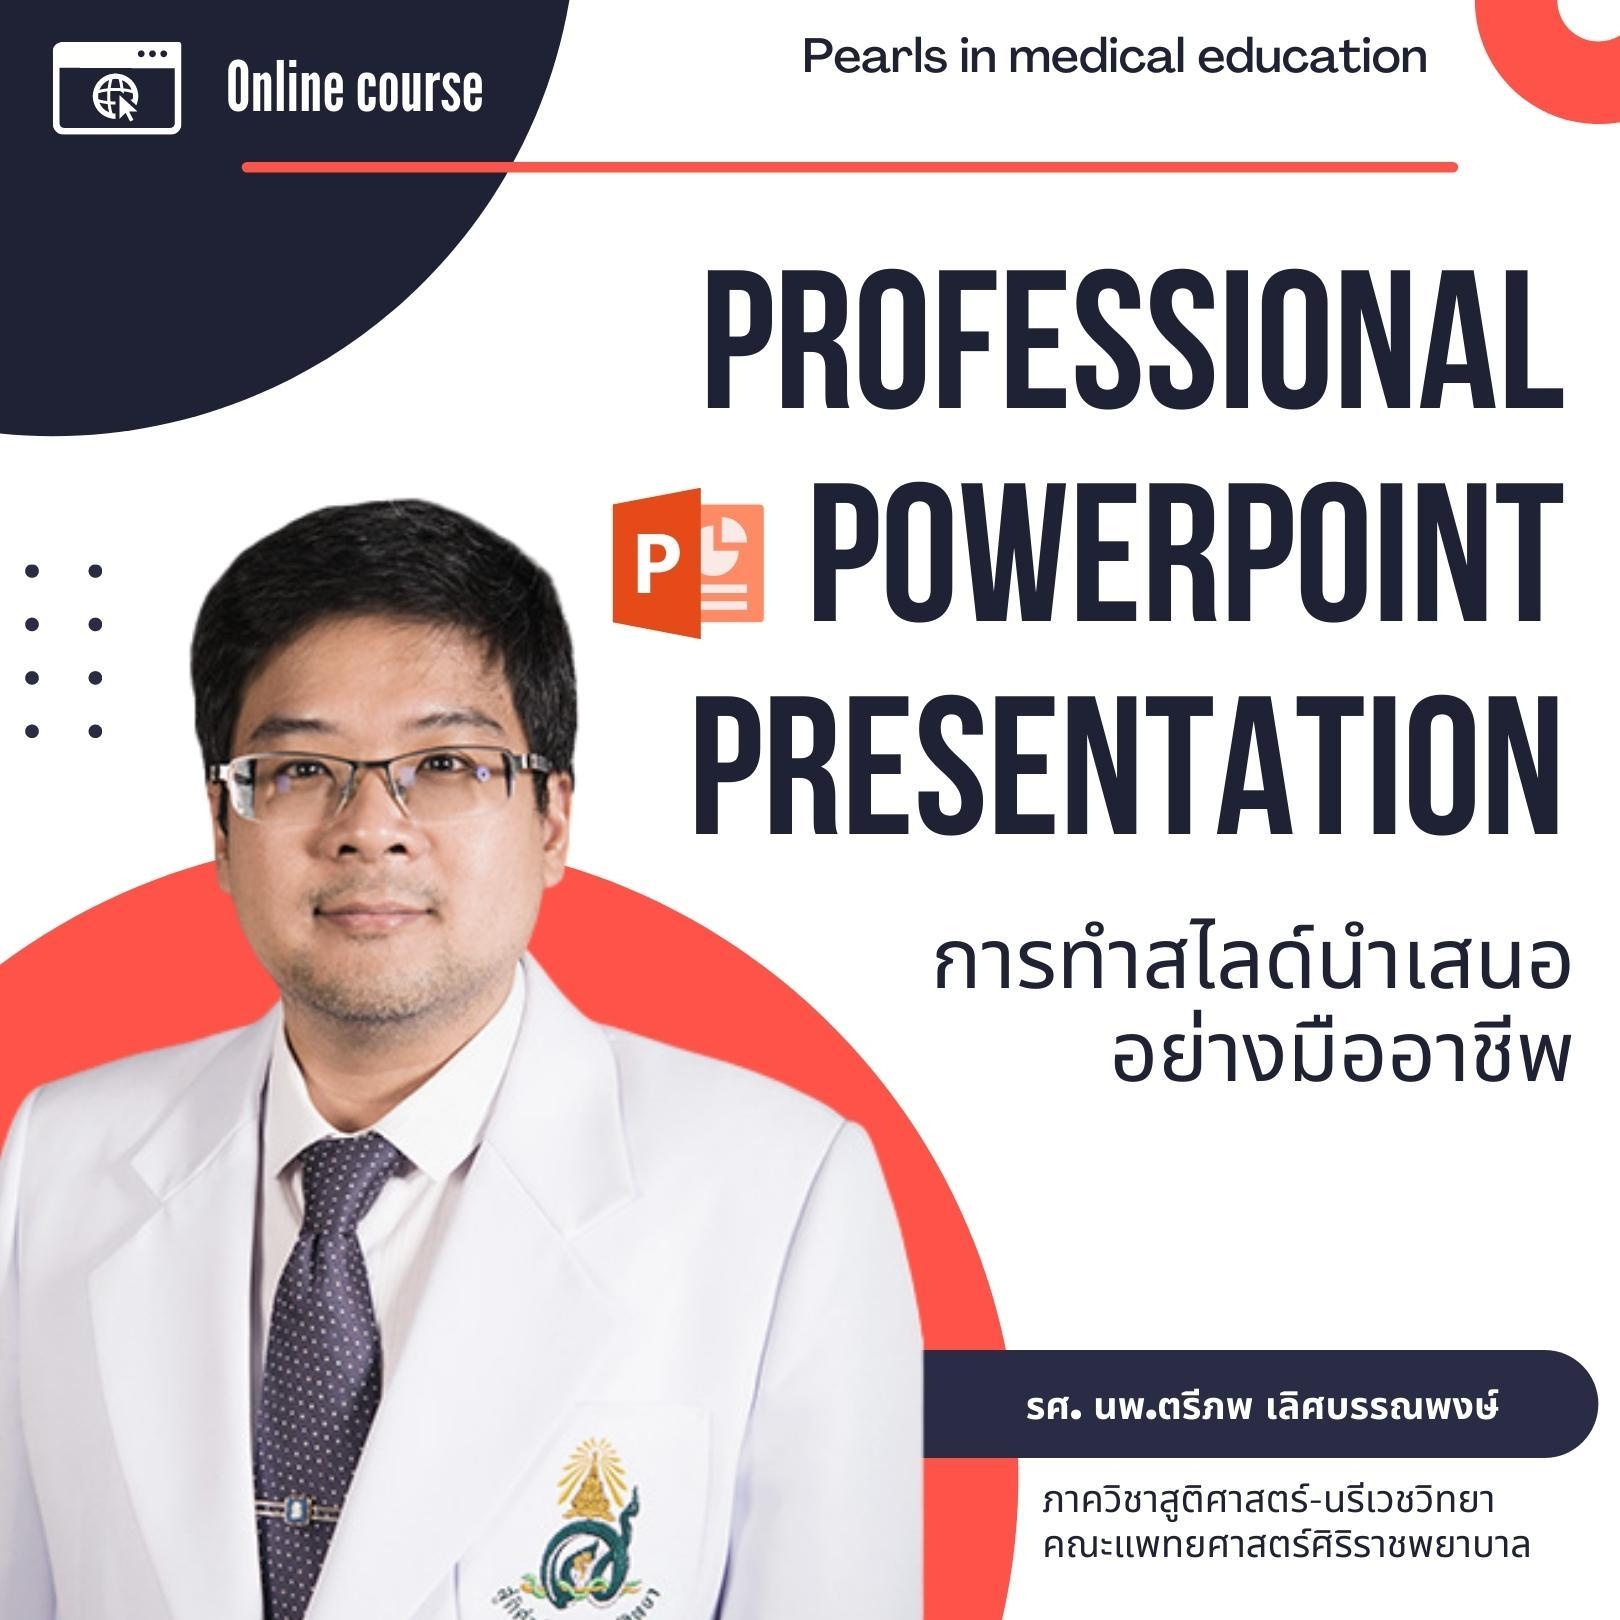 Professional PowerPoint Presentation การทำสไลด์นำเสนออย่างมืออาชีพ